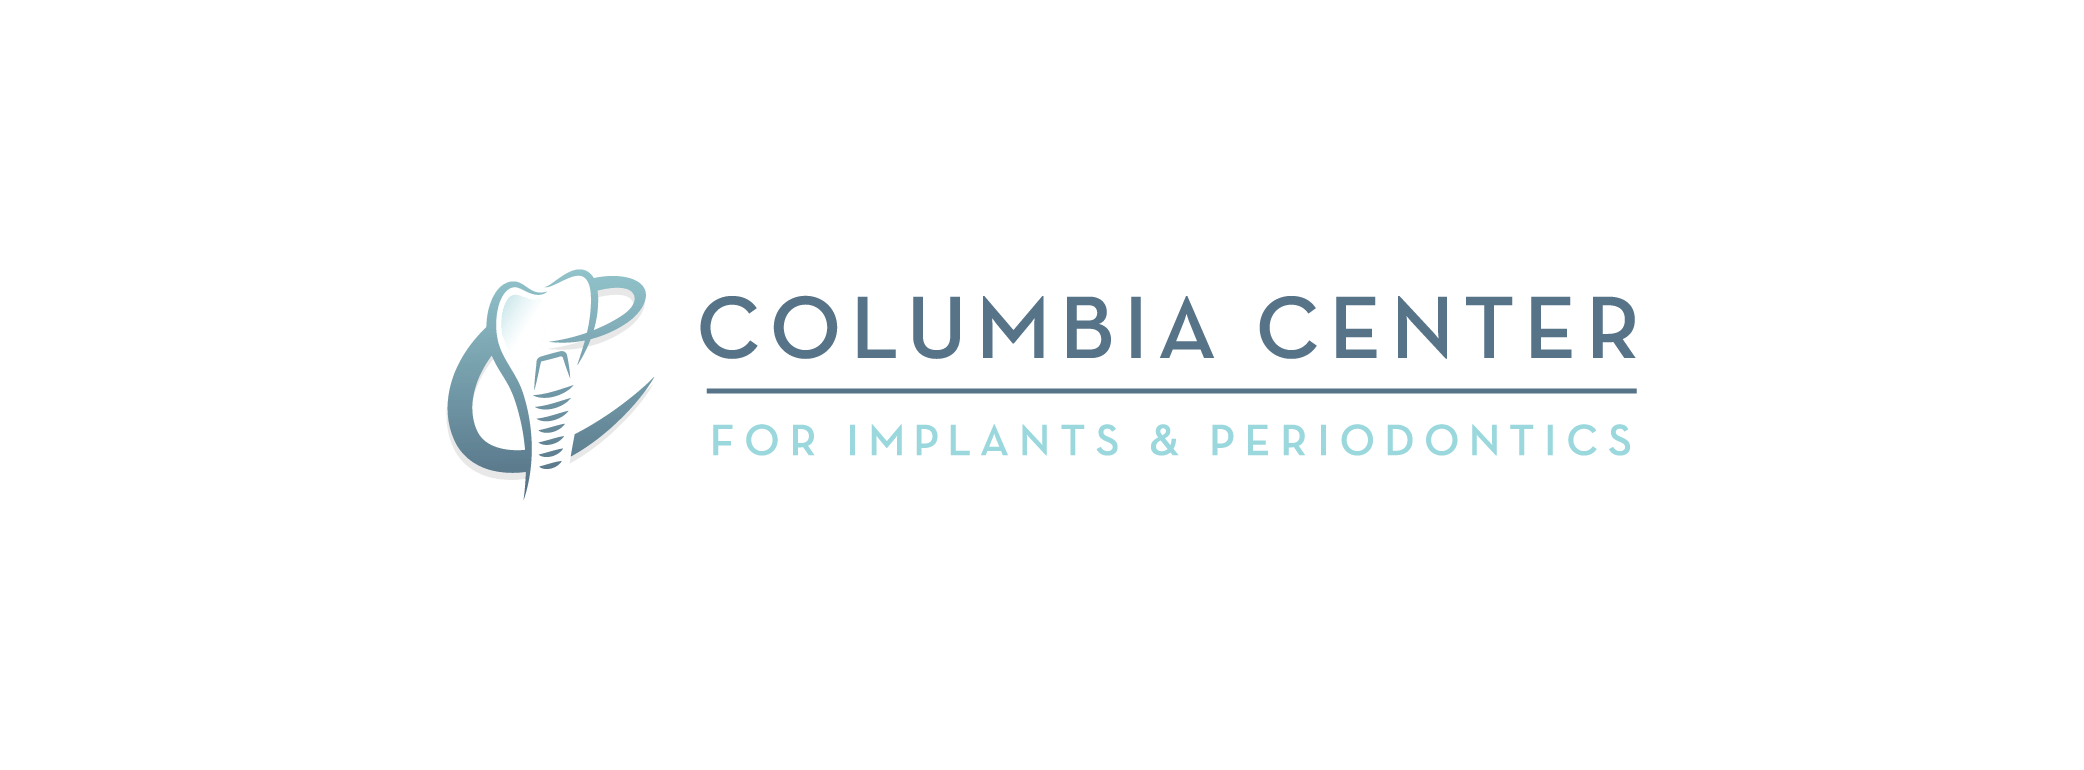 Columbia_Center_for_Implants_&_Periodontics_Logo_Template-1